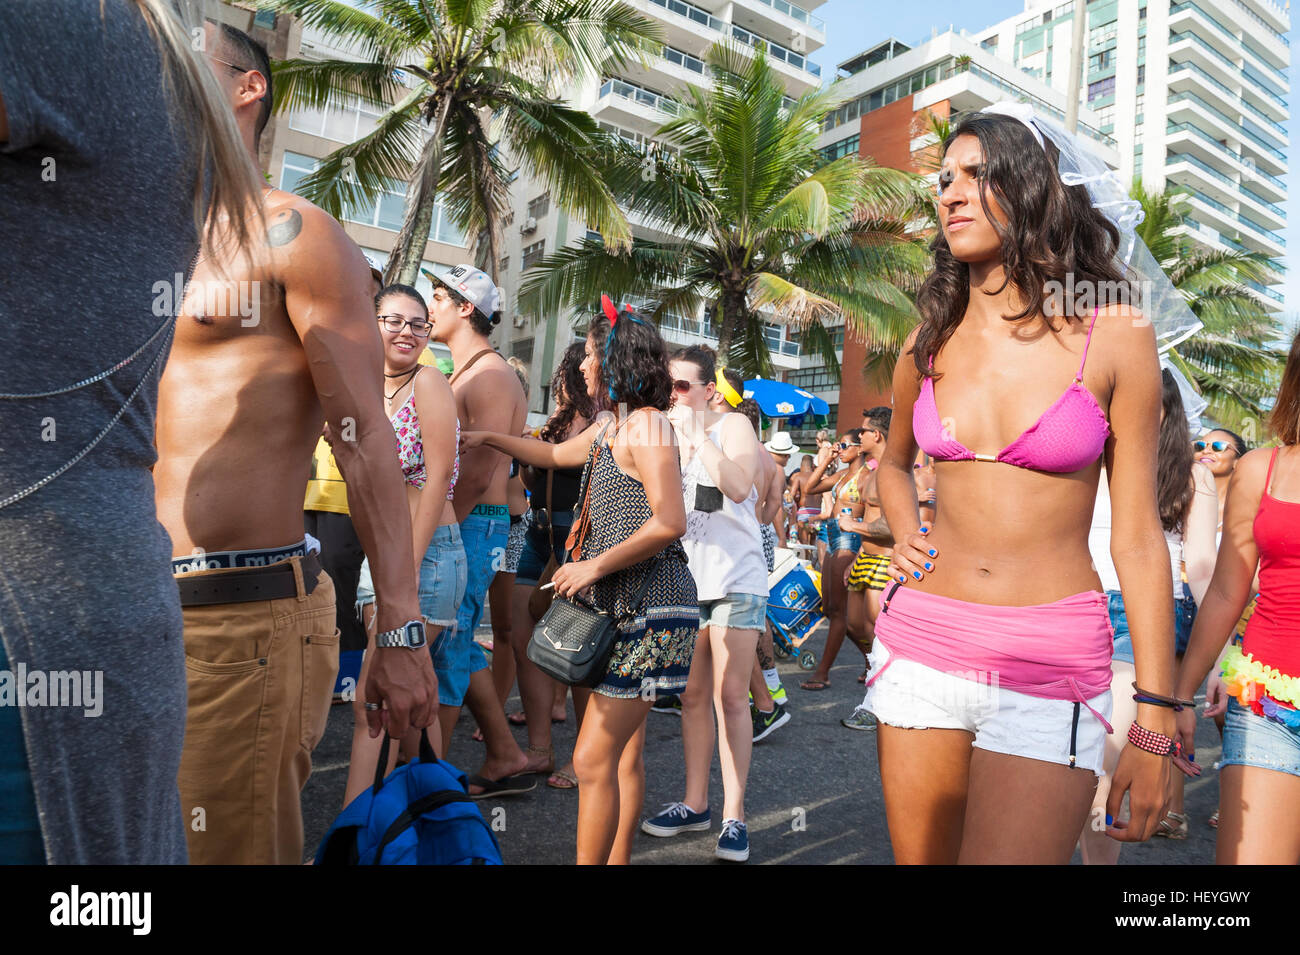 RIO DE JANEIRO - FEBRUARY 14, 2015: Vendors and revelers share the Ipanema beachfront at a Carnival street party. Stock Photo